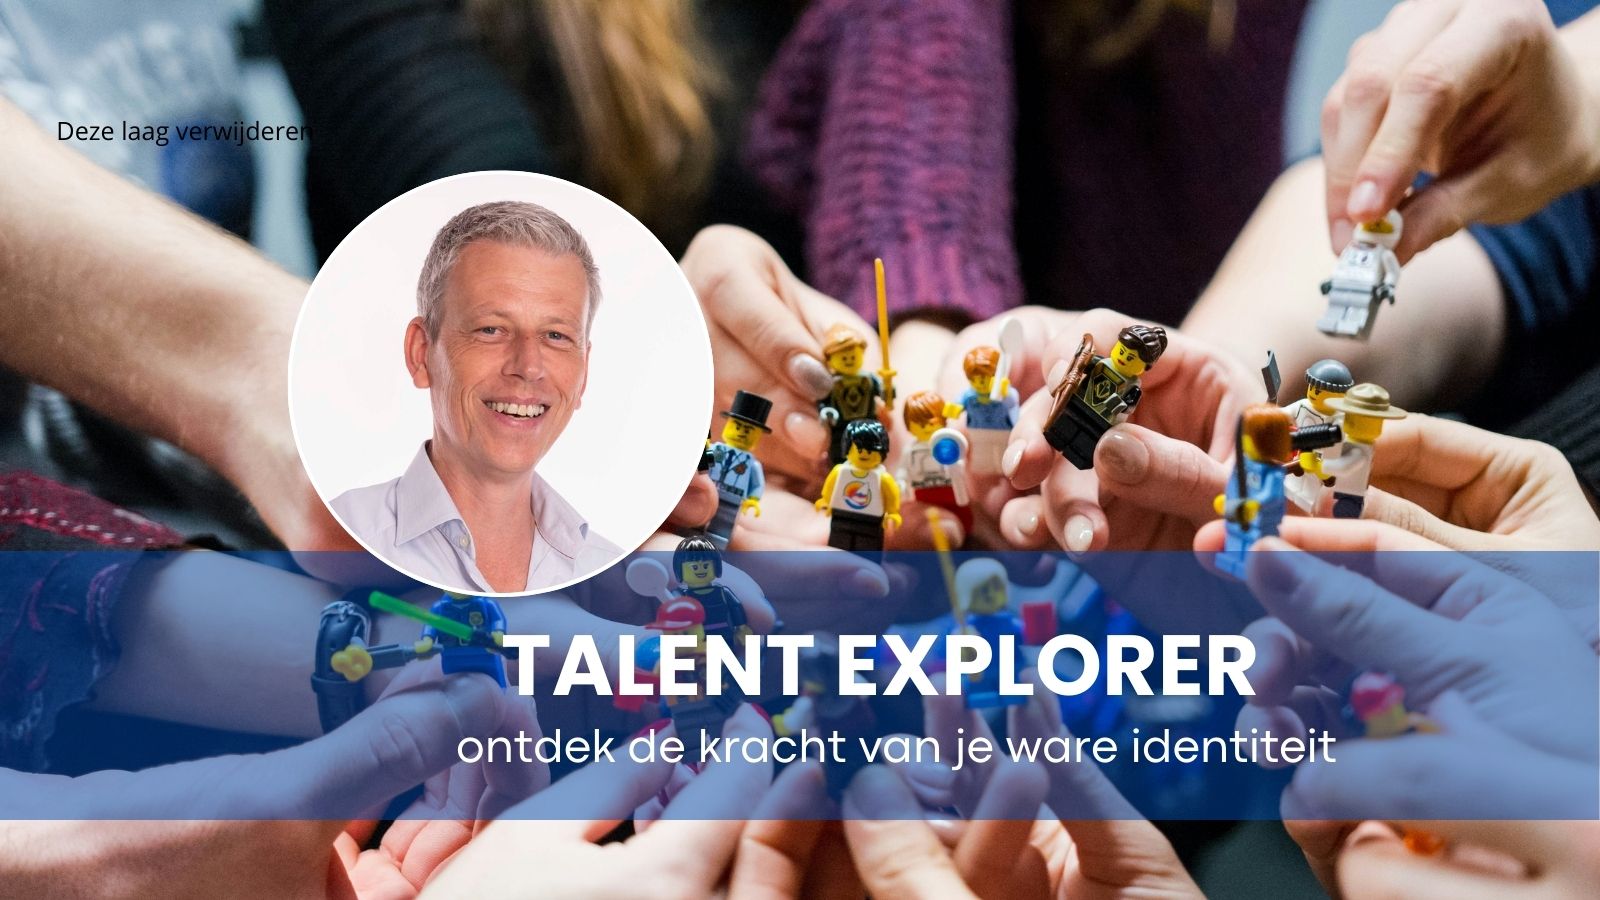 Bedrijfsuitje: Talent explorer